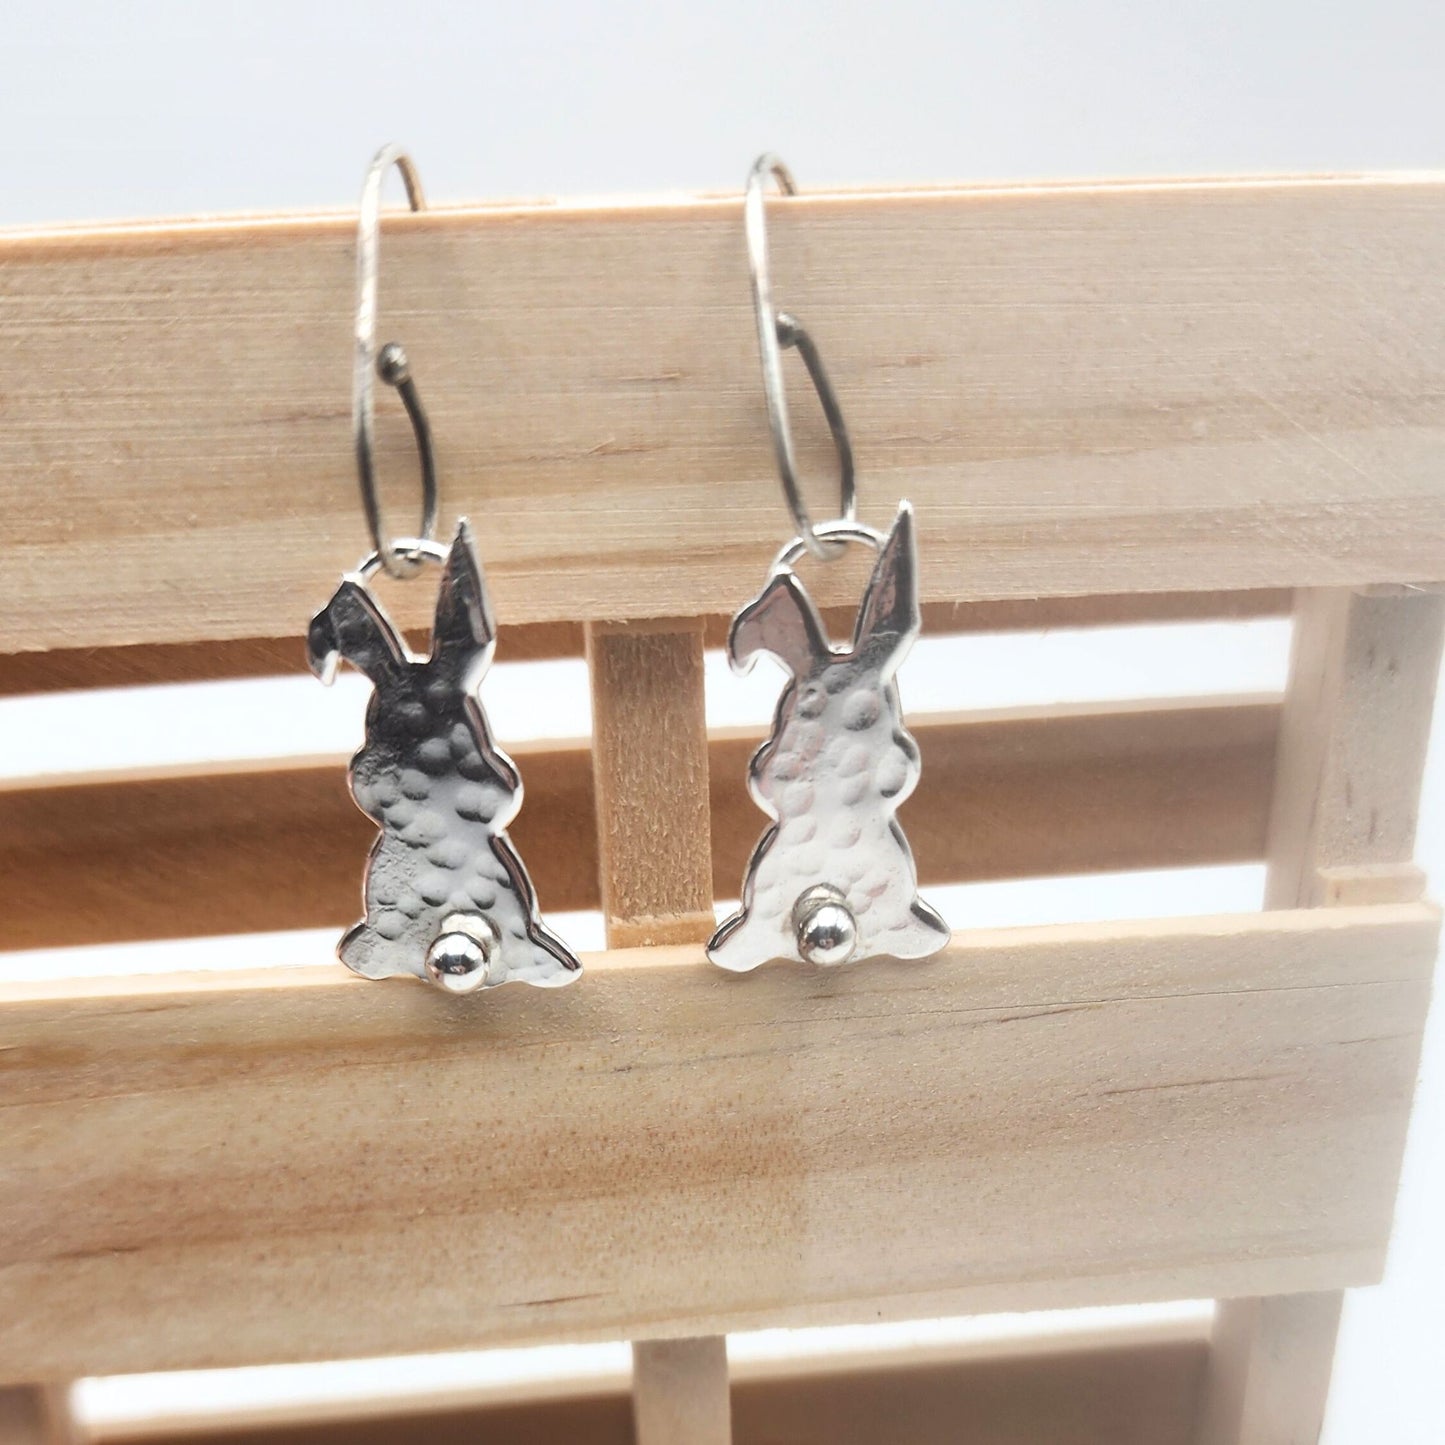 Bunny - Flower Connector Earrings